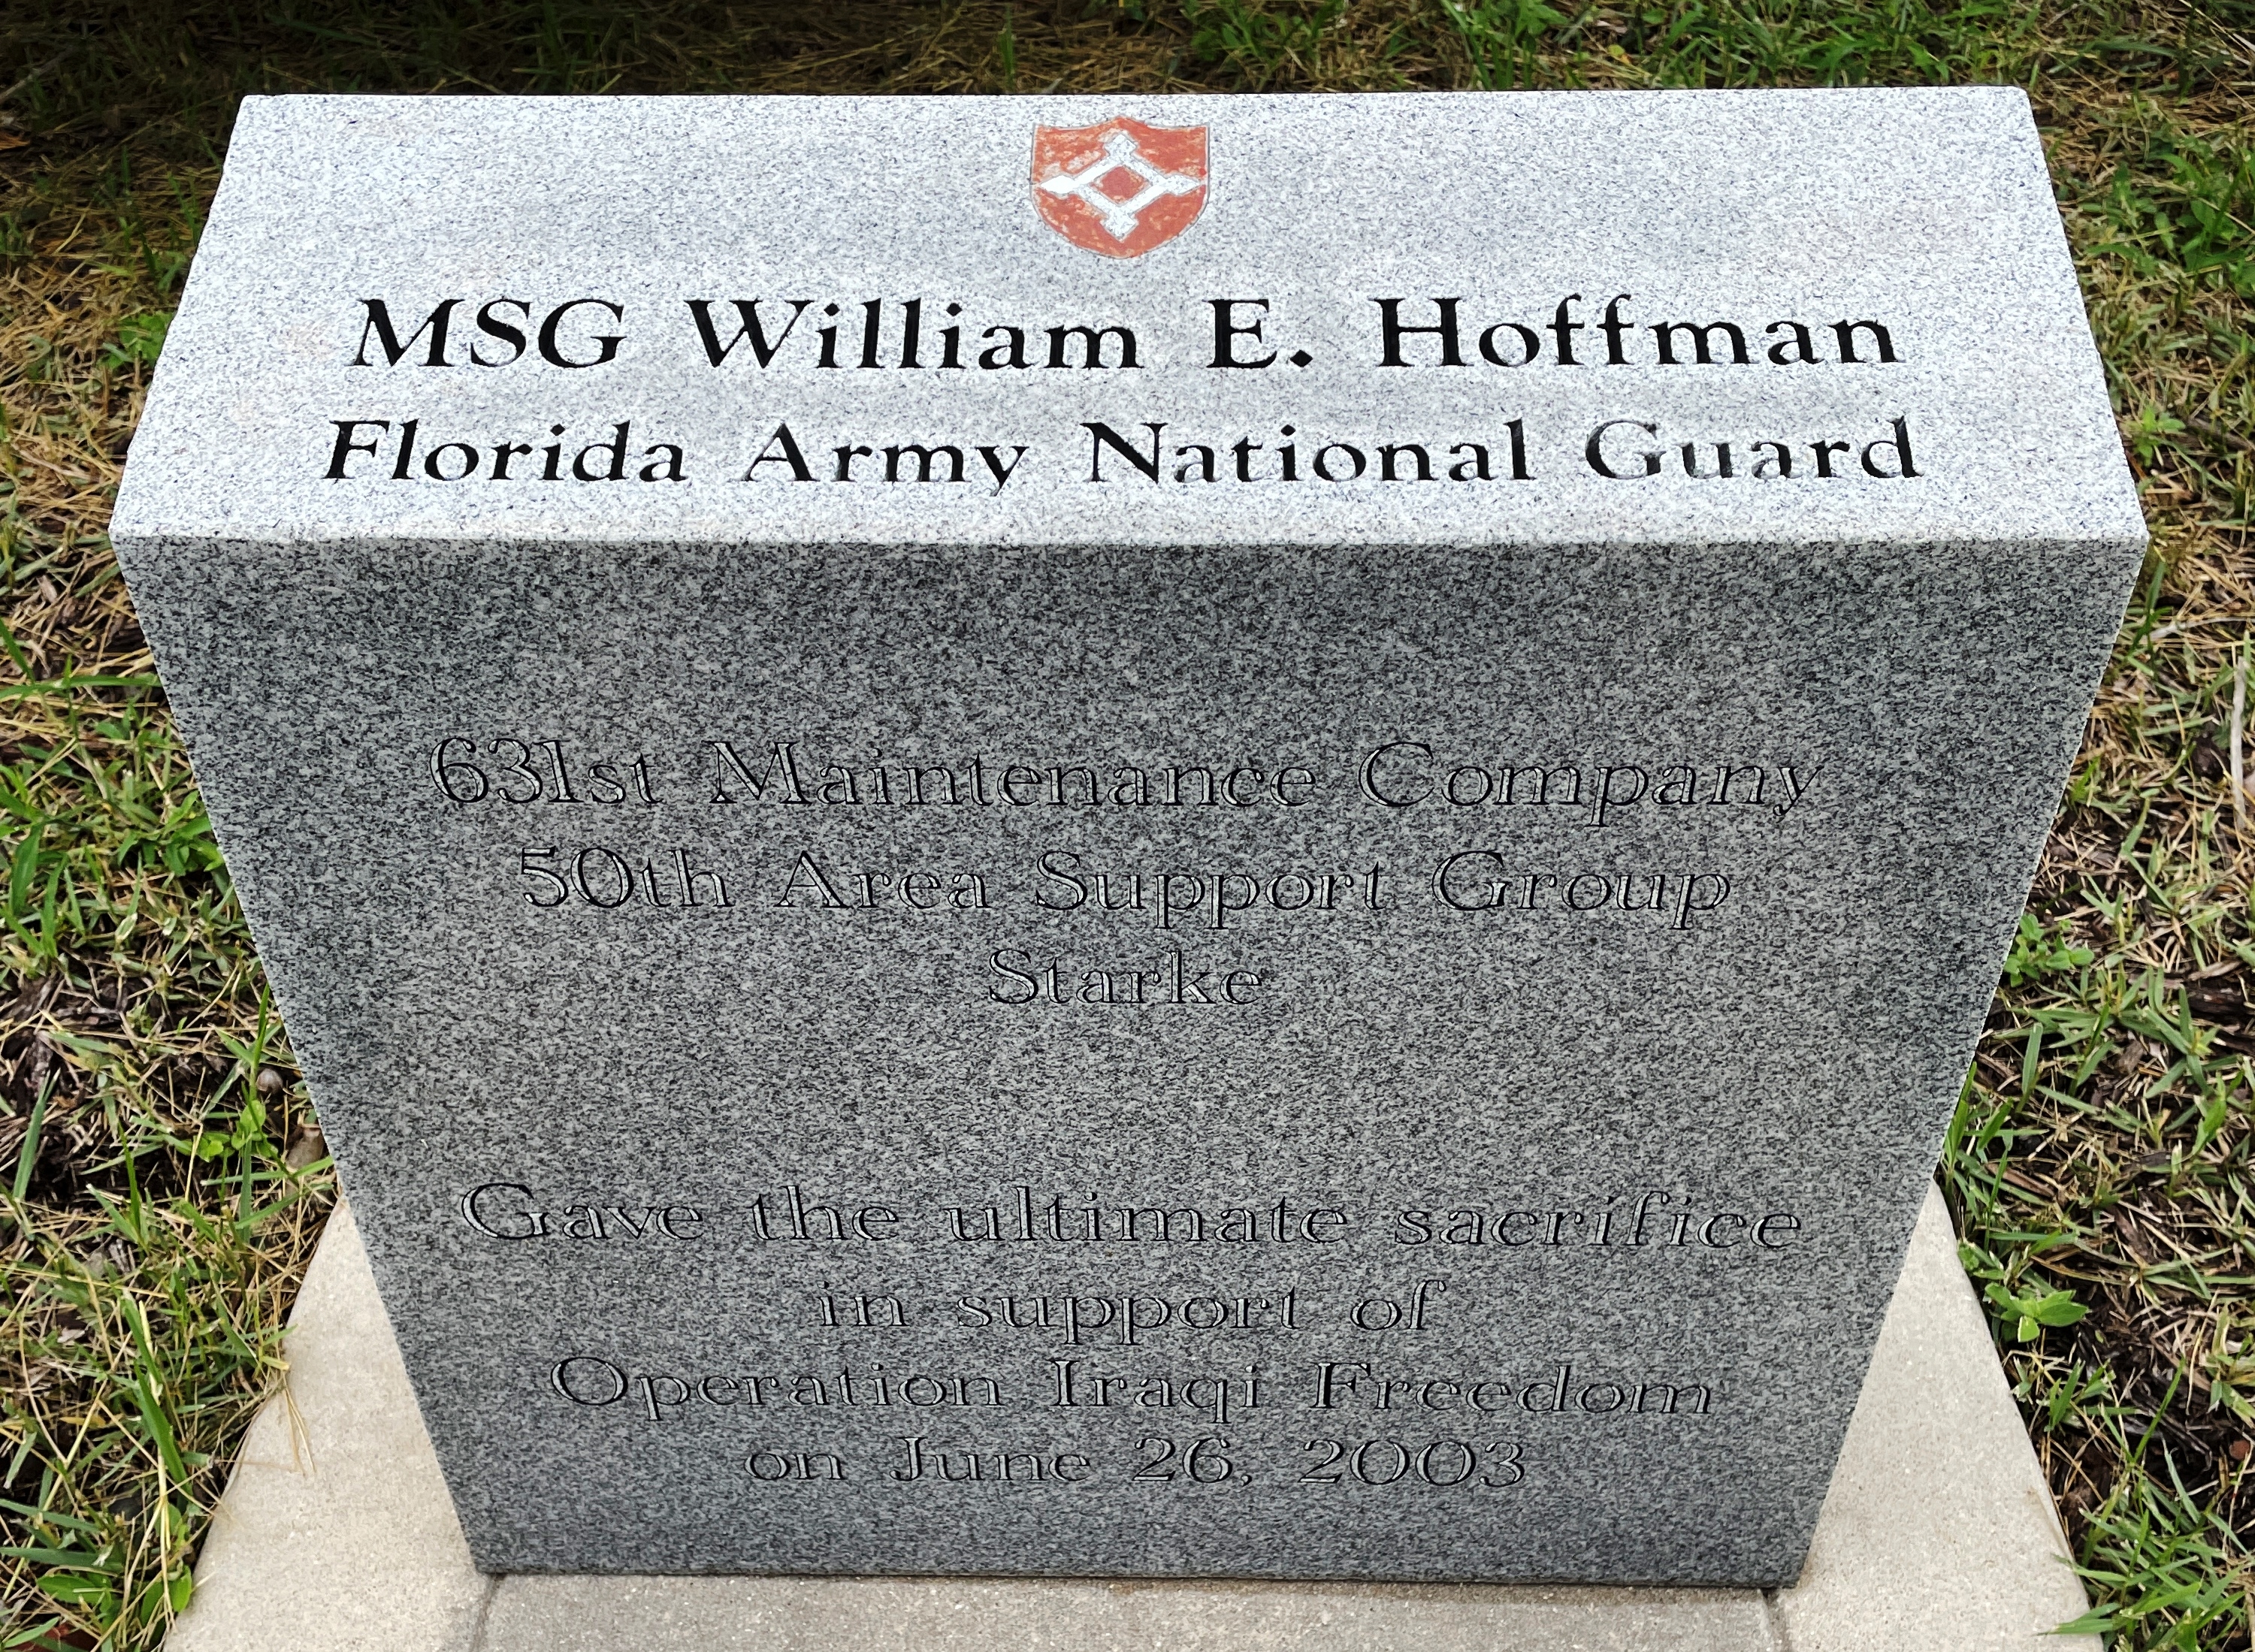 MSG William E. Hoffman Marker